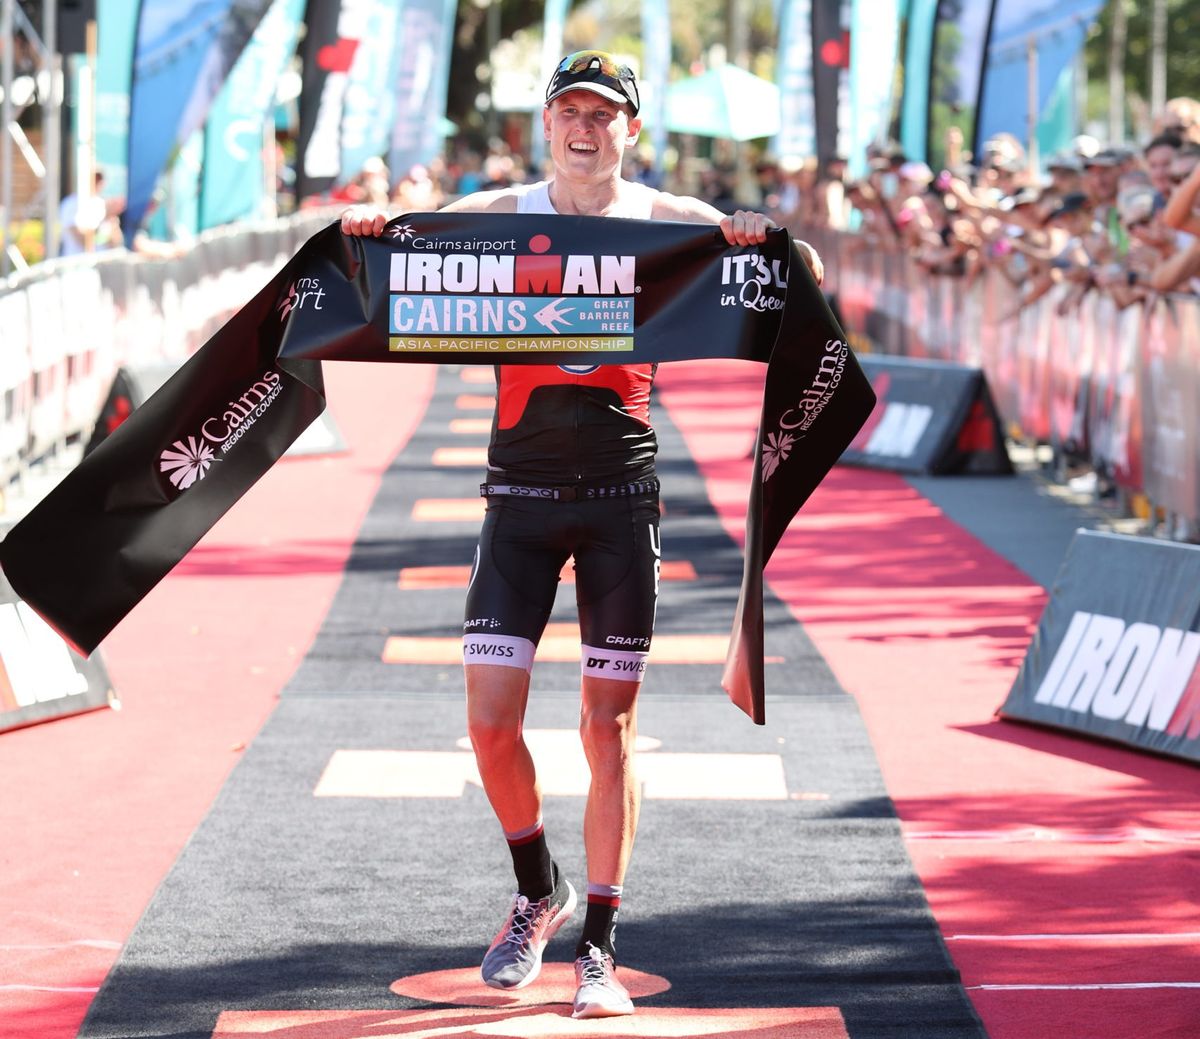 Neumann digs deep to claim maiden Ironman title in Cairns